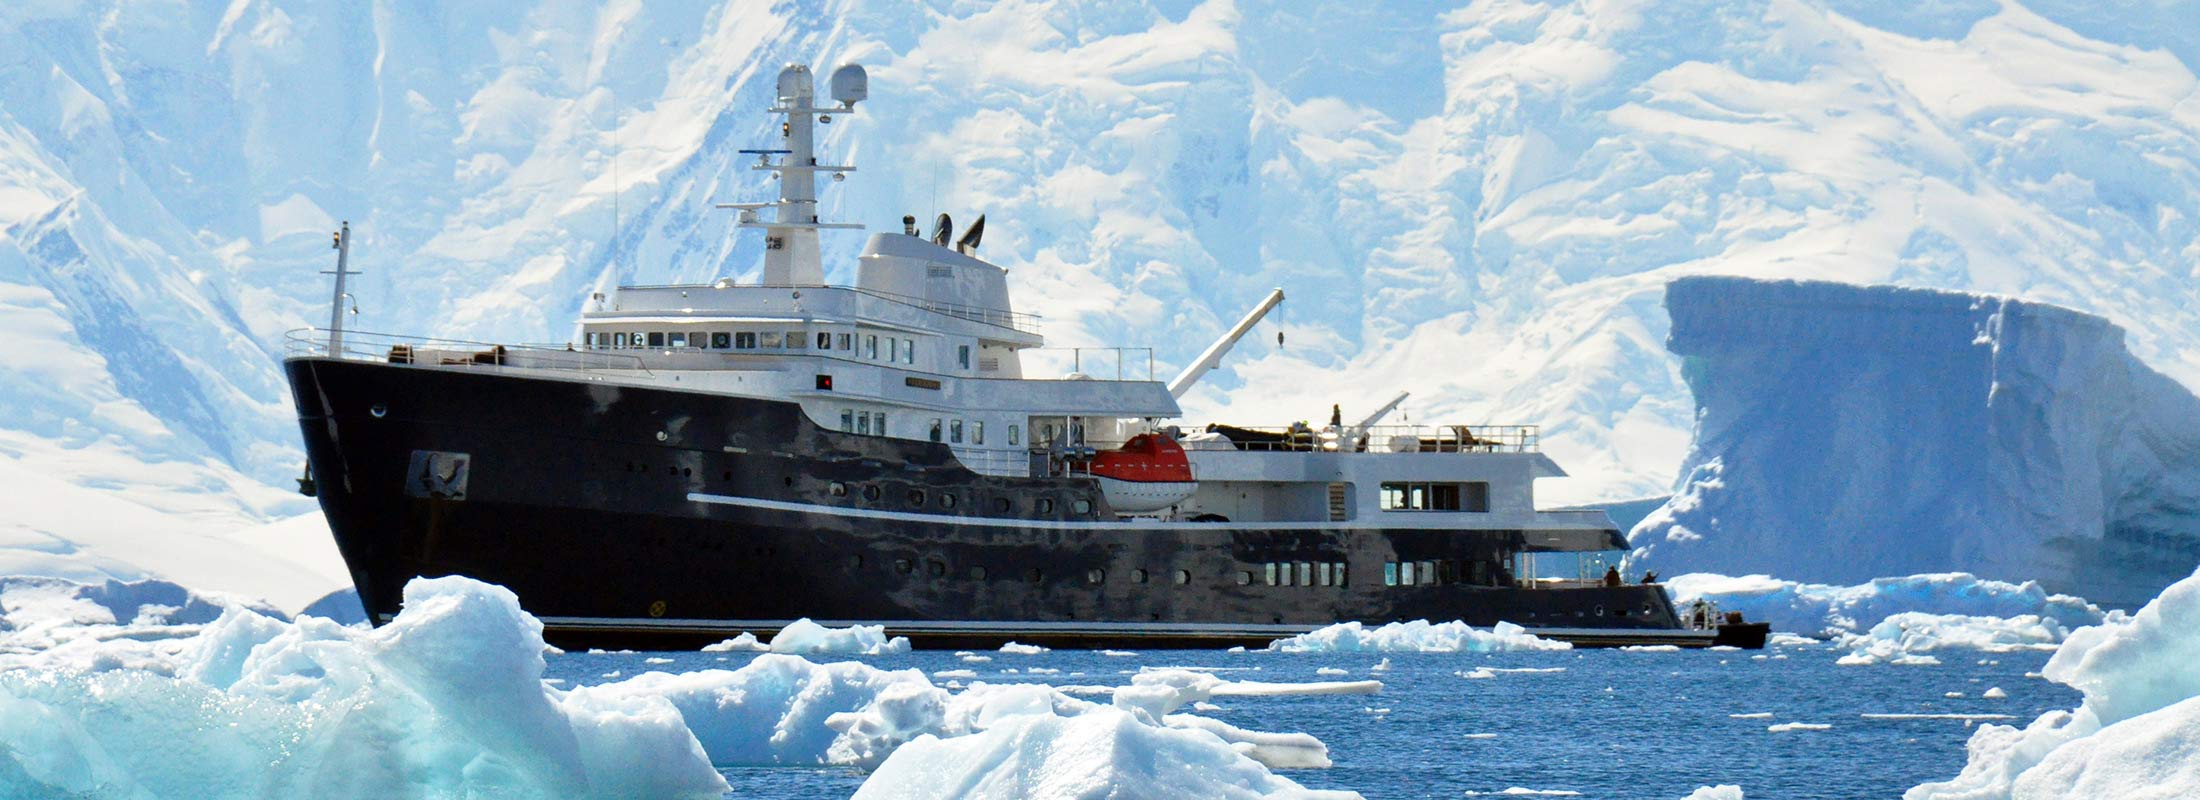 Legend Motor Yacht for Charter Arctic slider 1